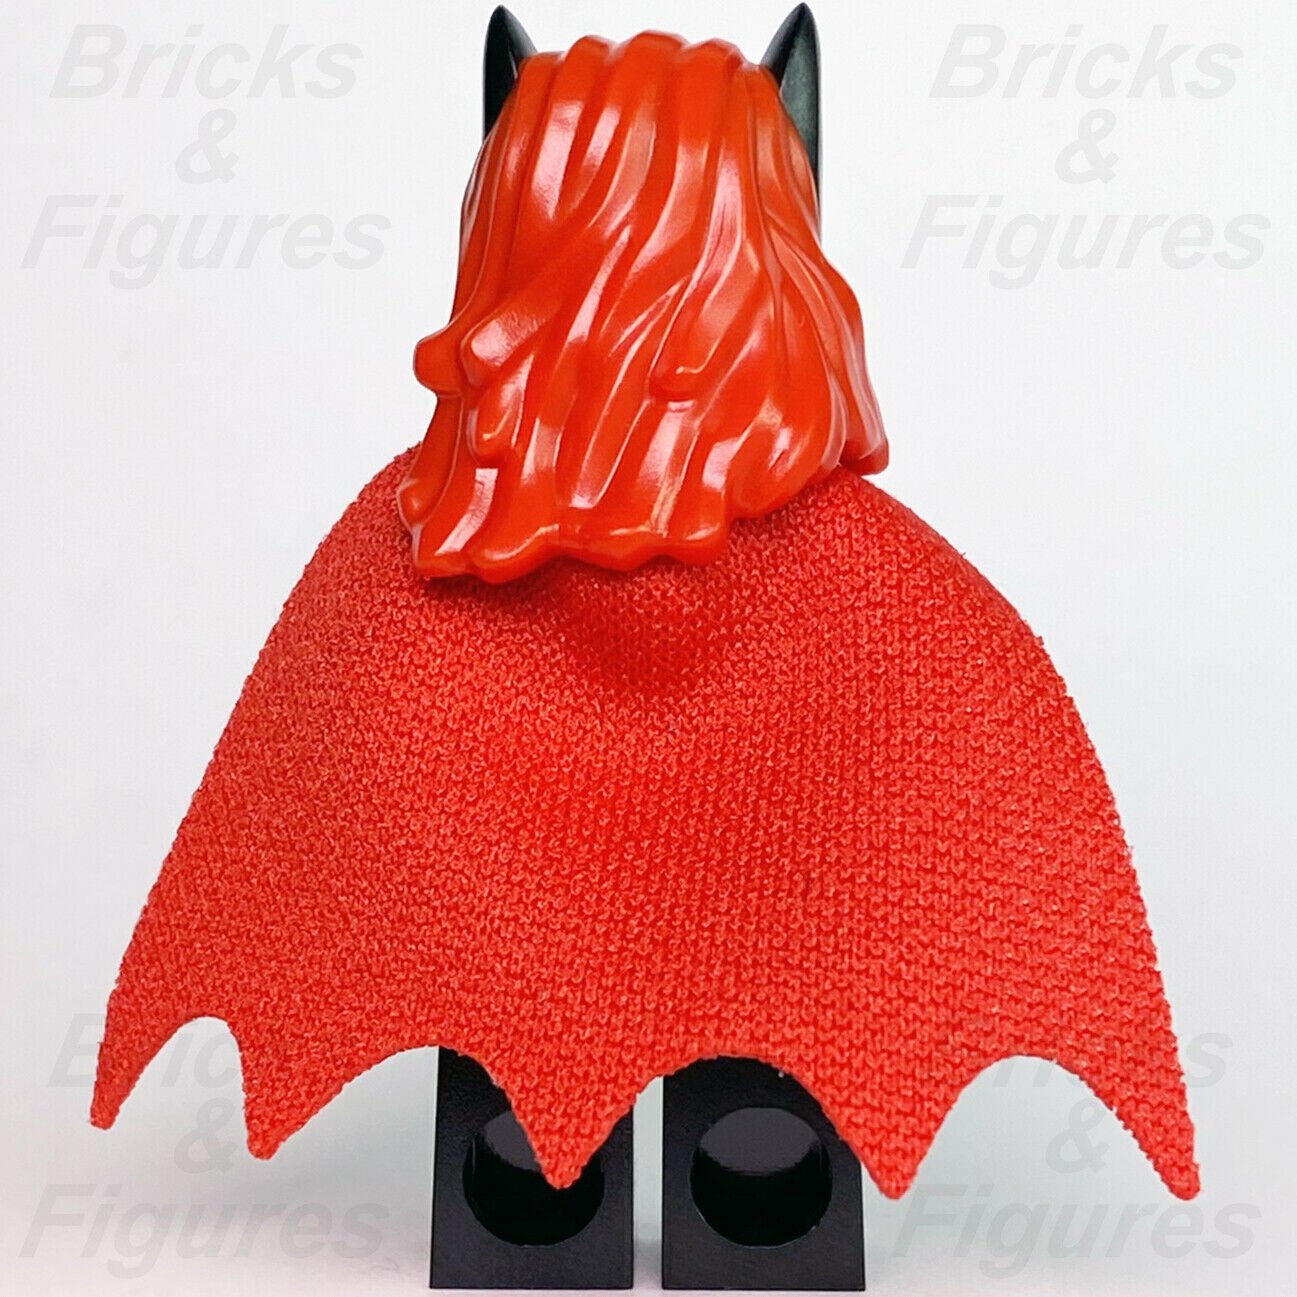 New DC Super Heroes LEGO Batwoman 2 Katherine Kane Minifigure 76122 sh522 - Bricks & Figures